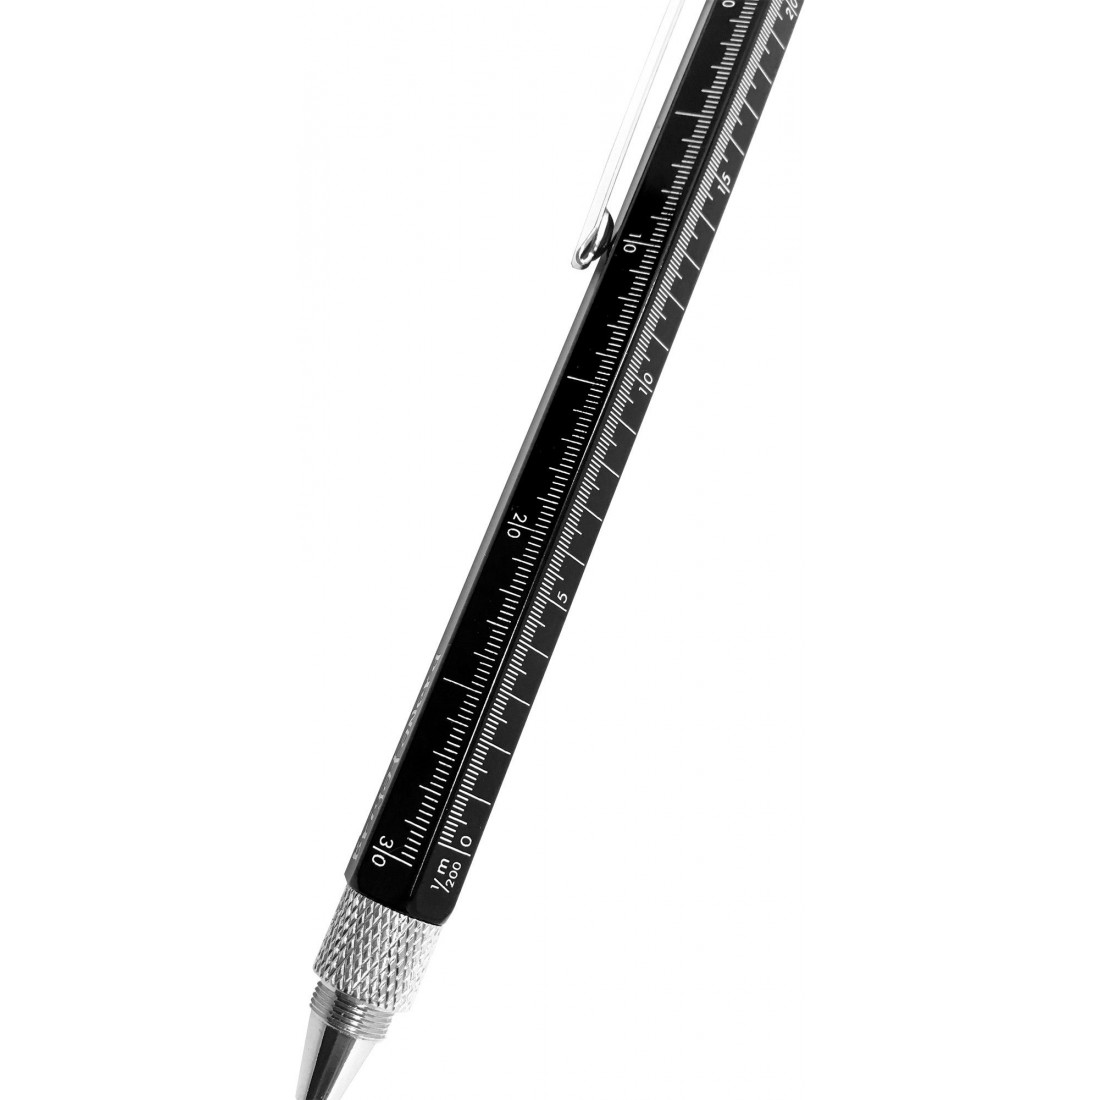 6 en 1 stylus stylus agua escala regla destornillador lápiz óptico